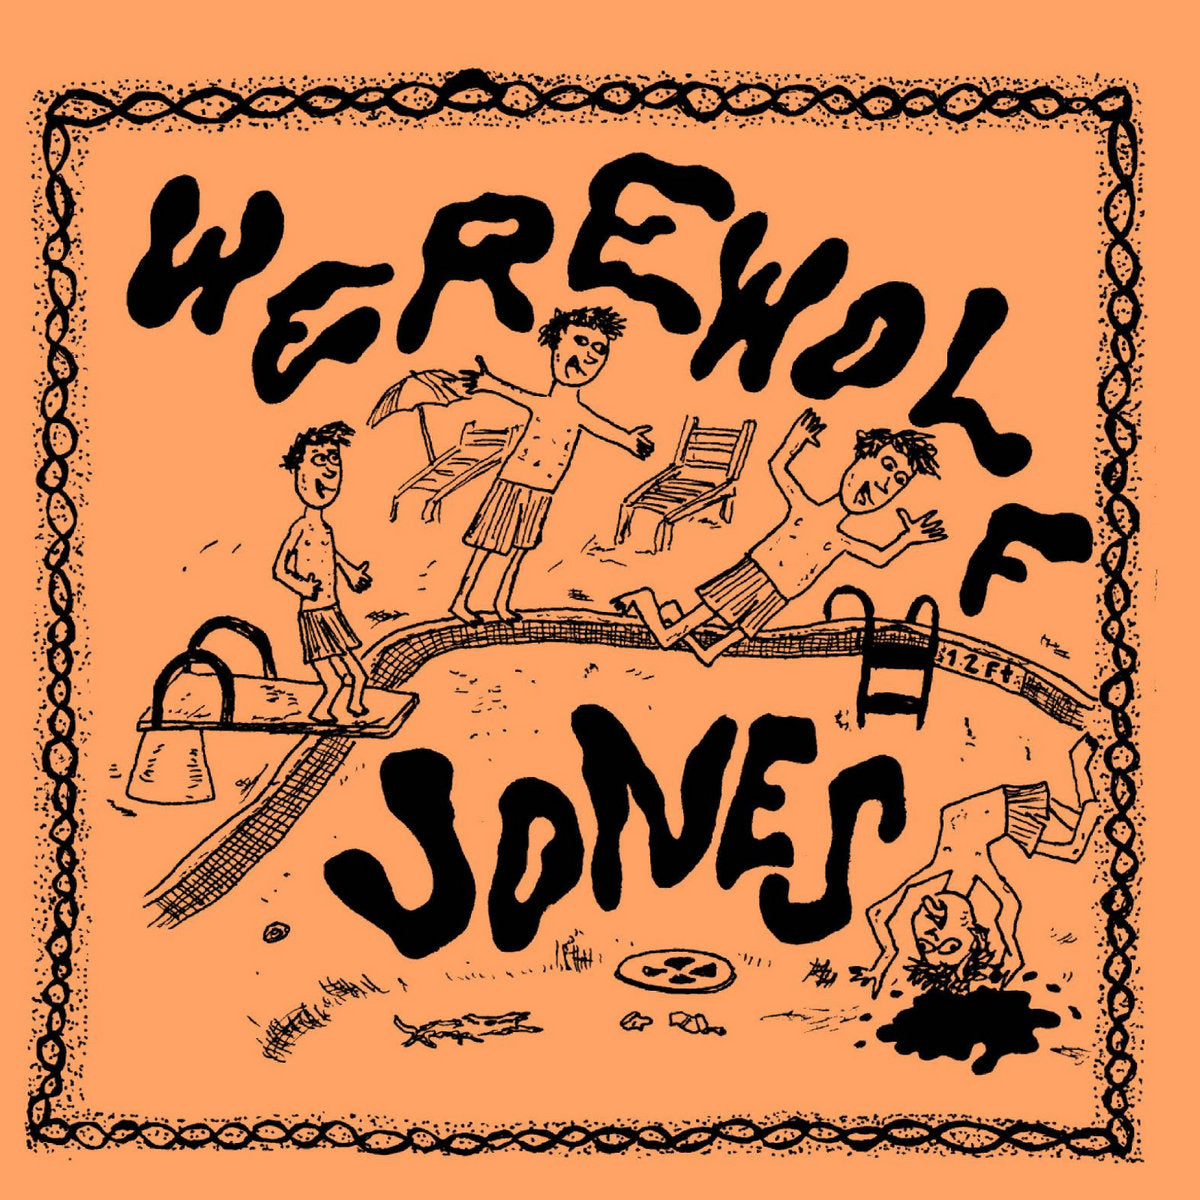 Werewolf Jones - "Werewolf Jones" 7-inch